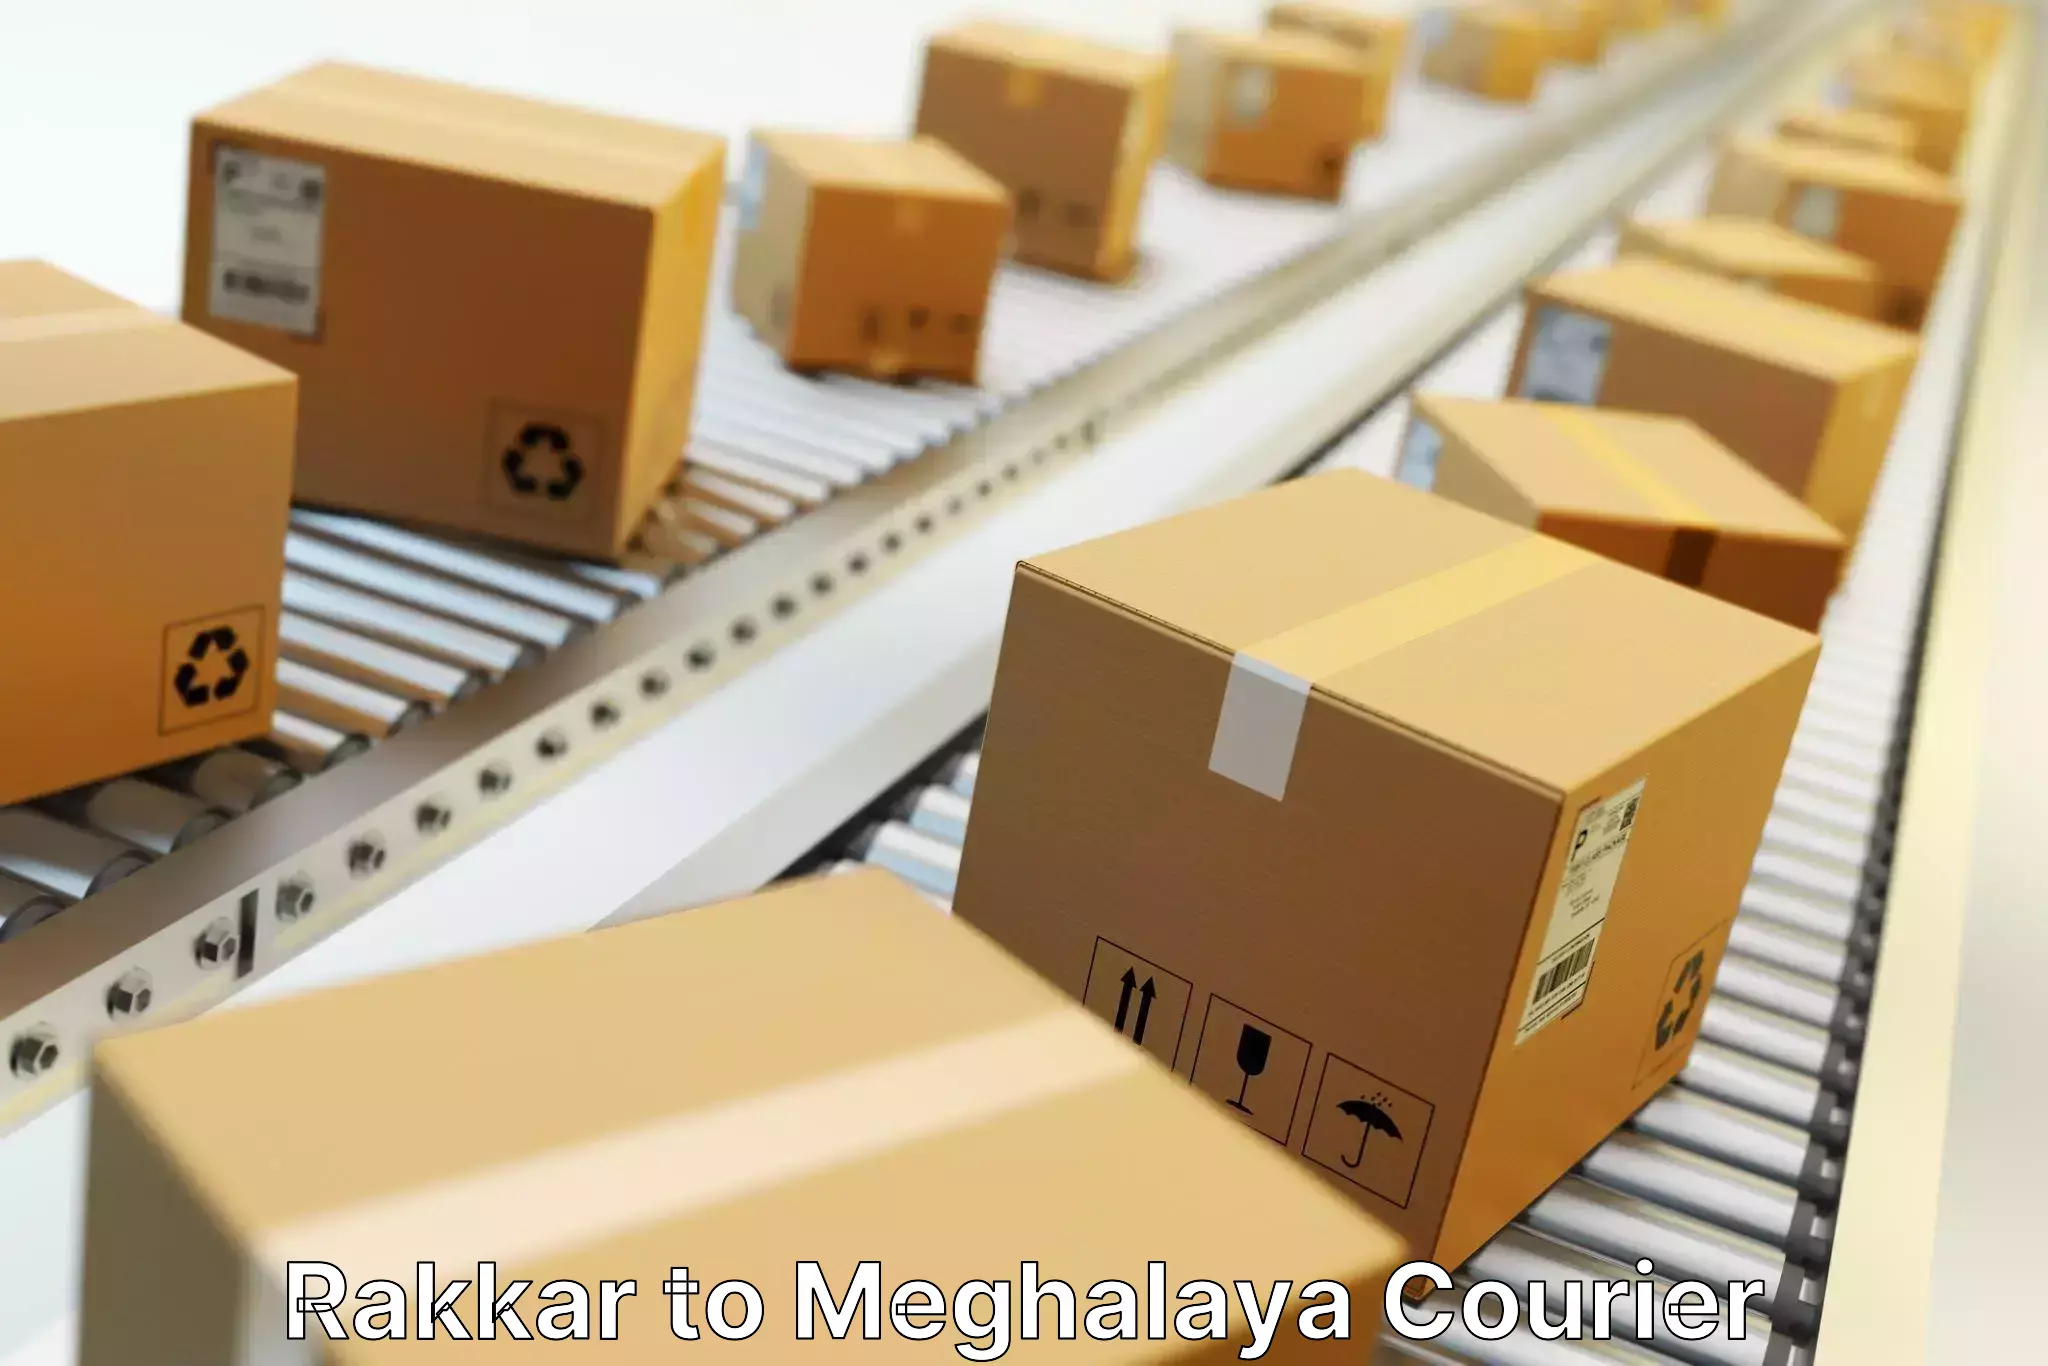 Express mail solutions Rakkar to Meghalaya